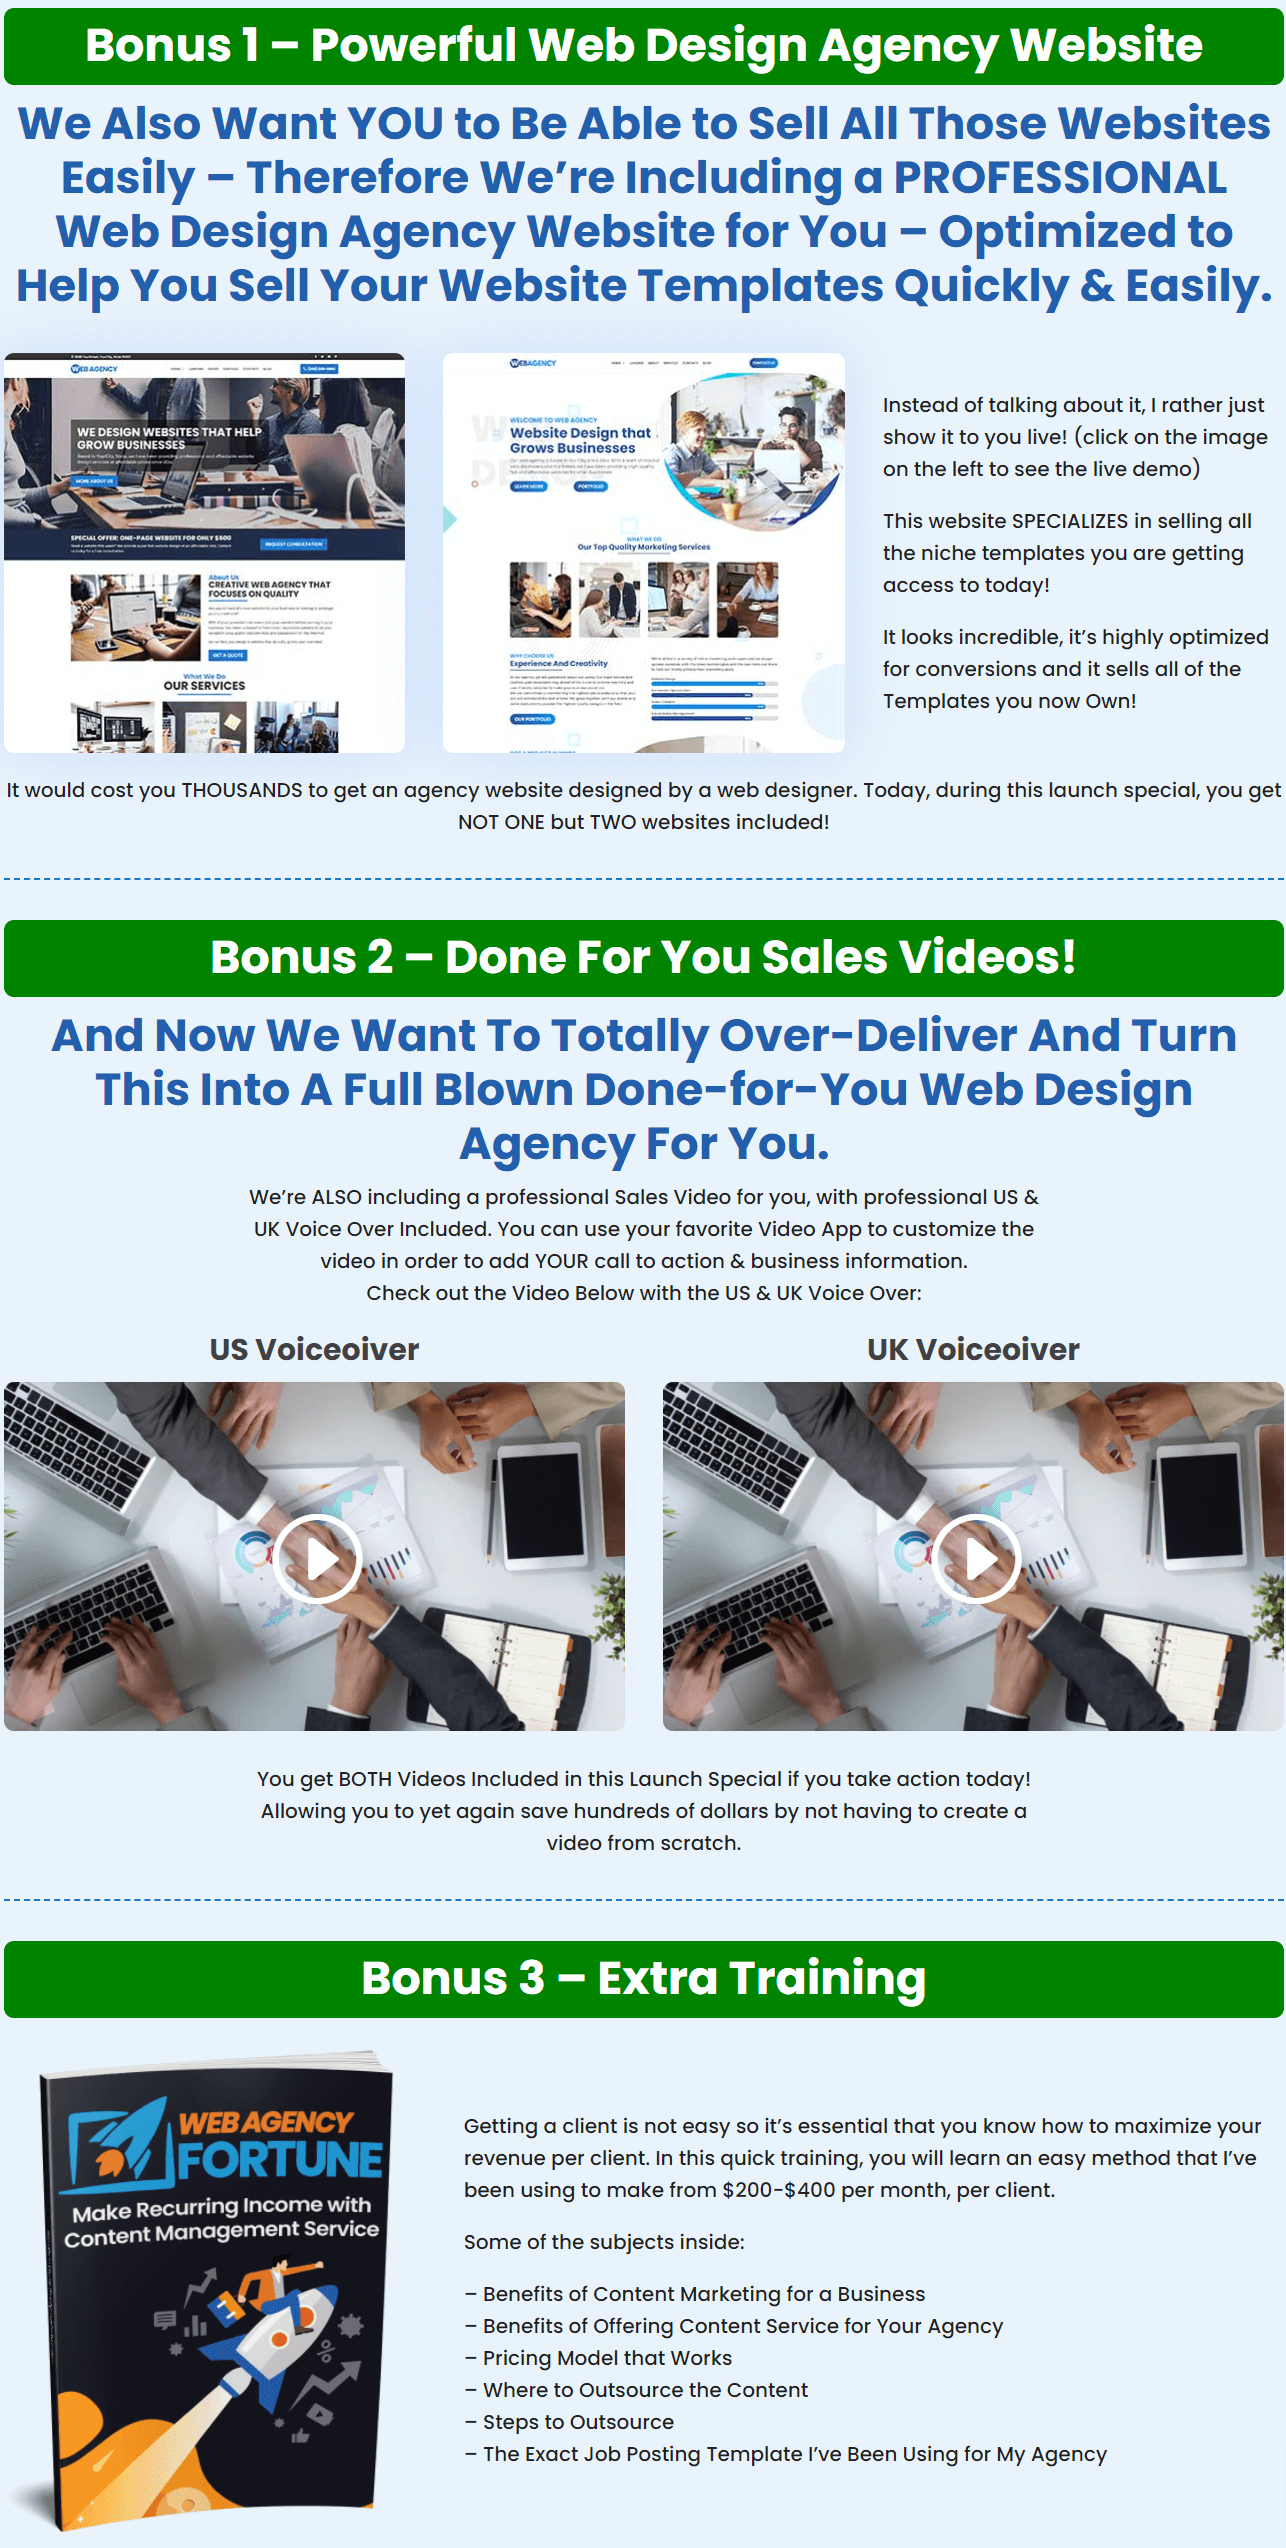 Web Agency Fortune Vol.5 bonus